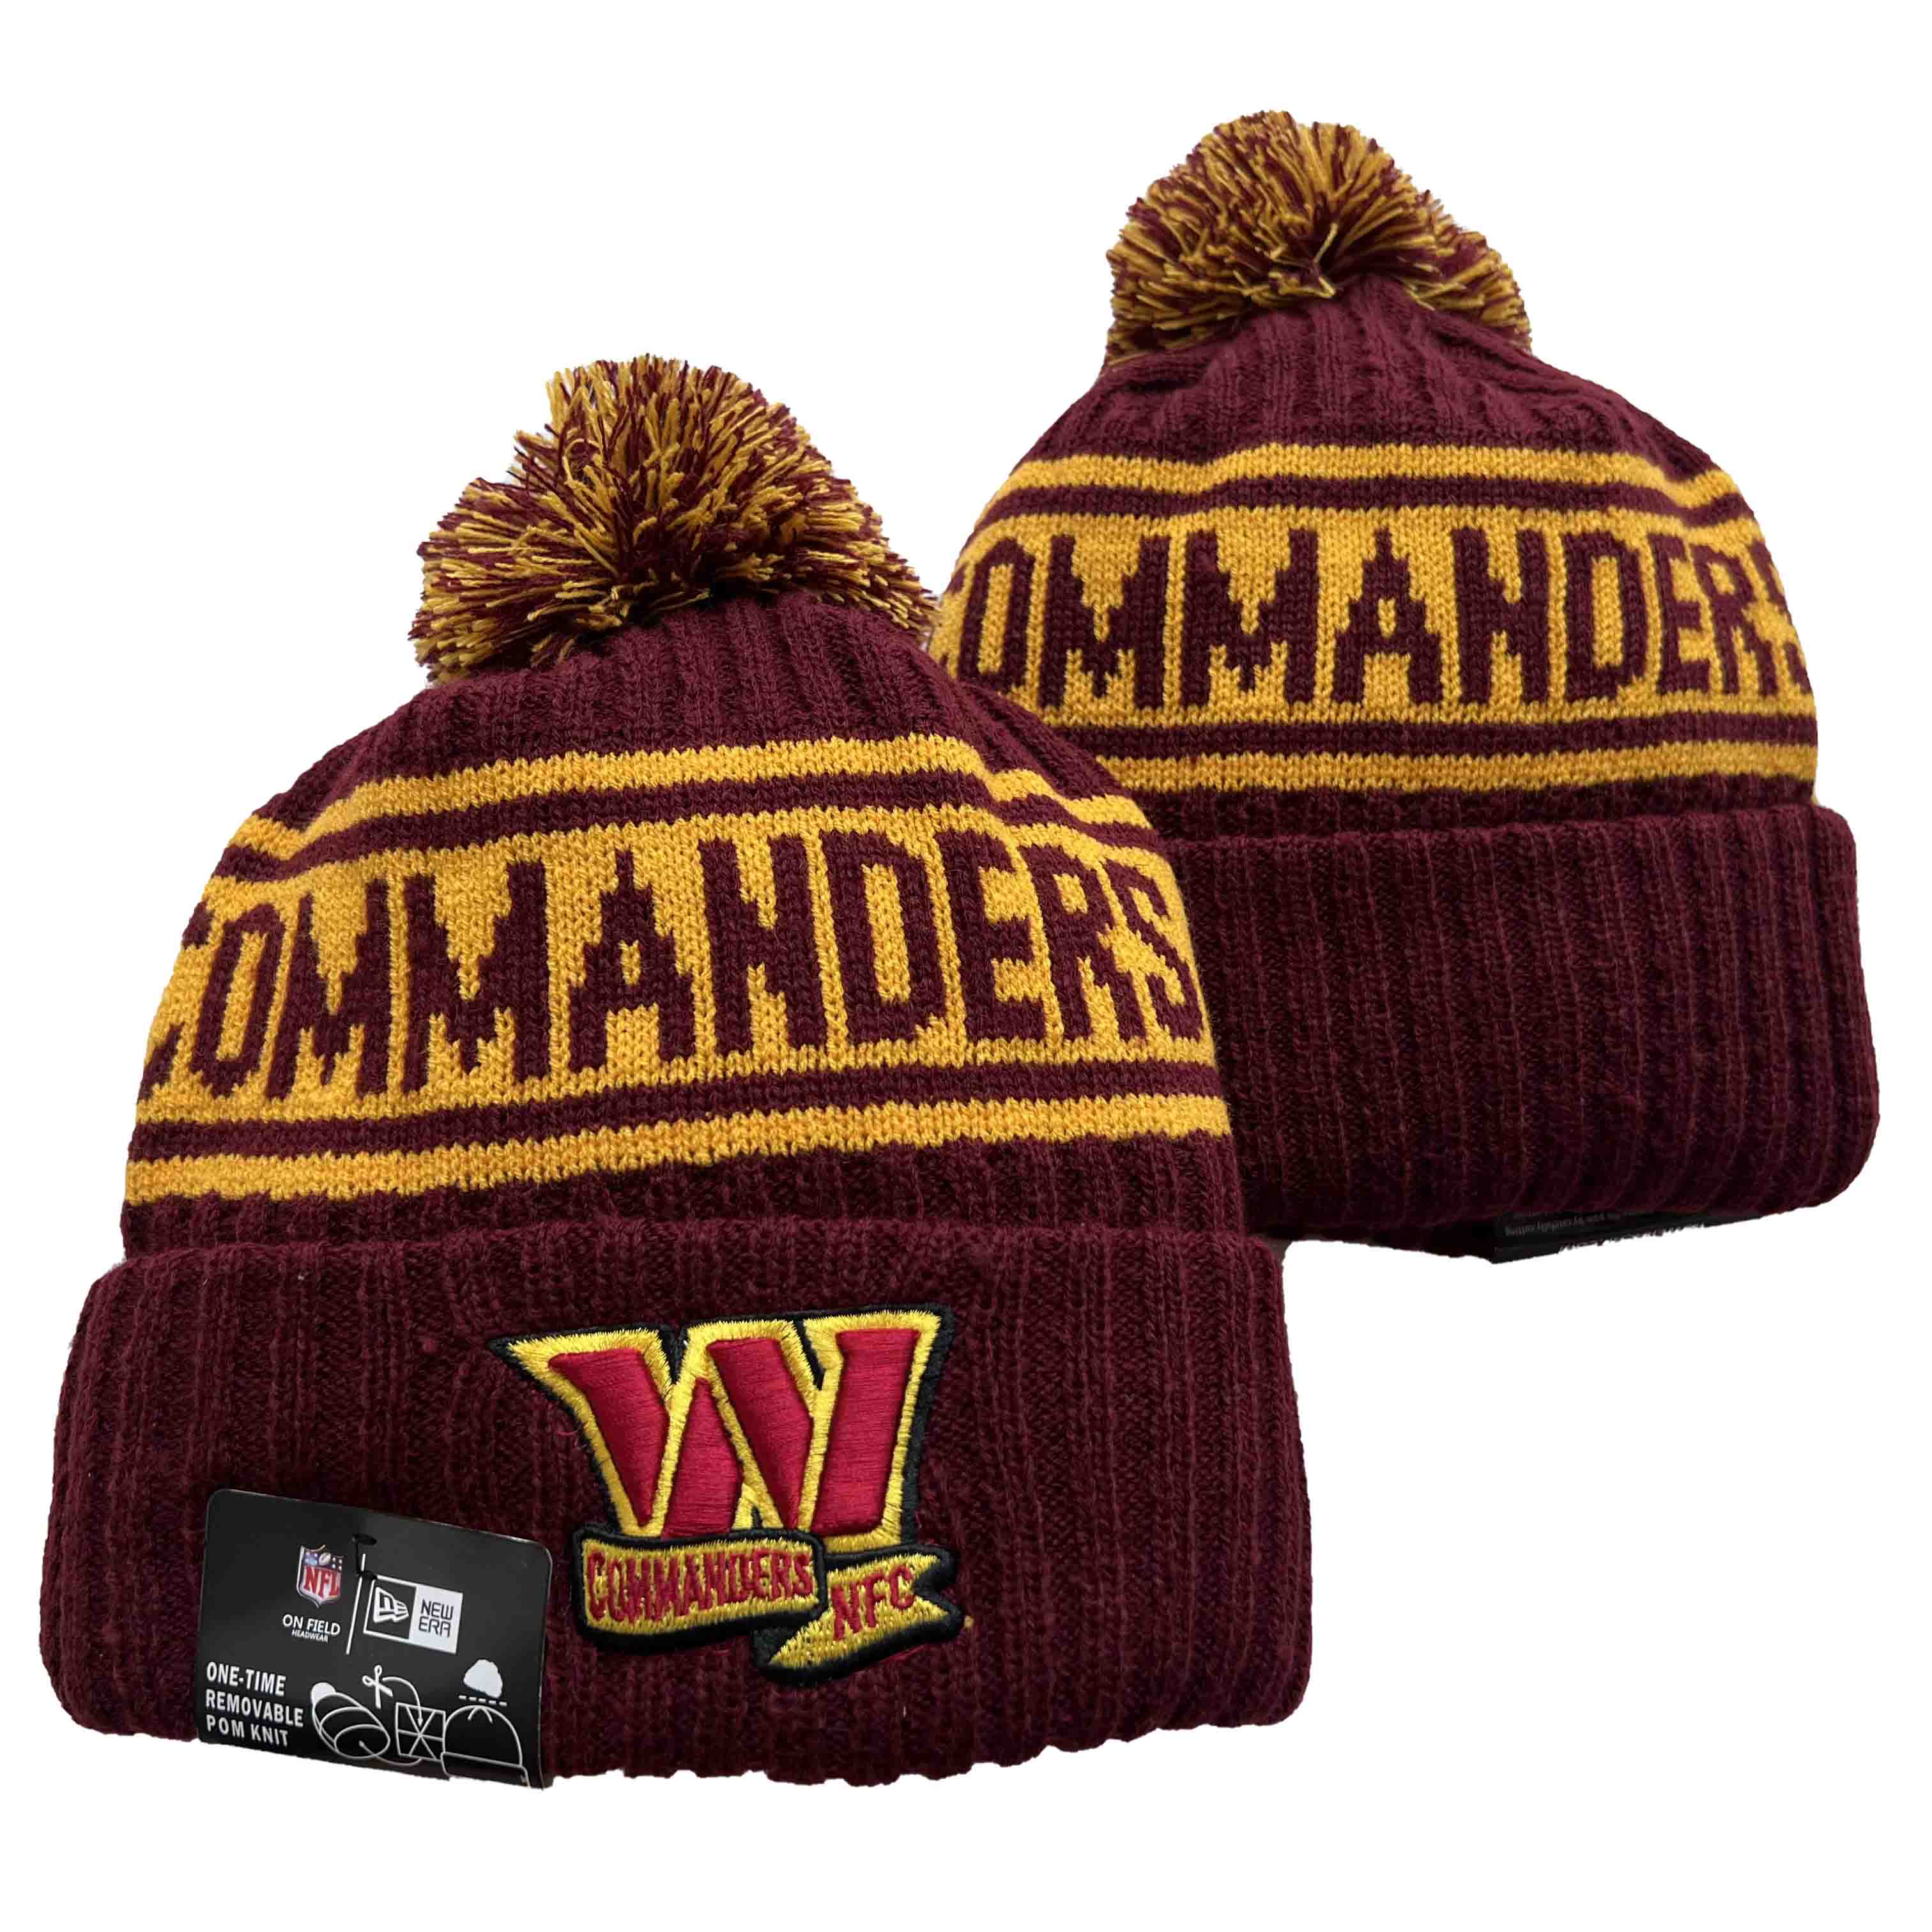 Washington Commanders Knit Hats -1